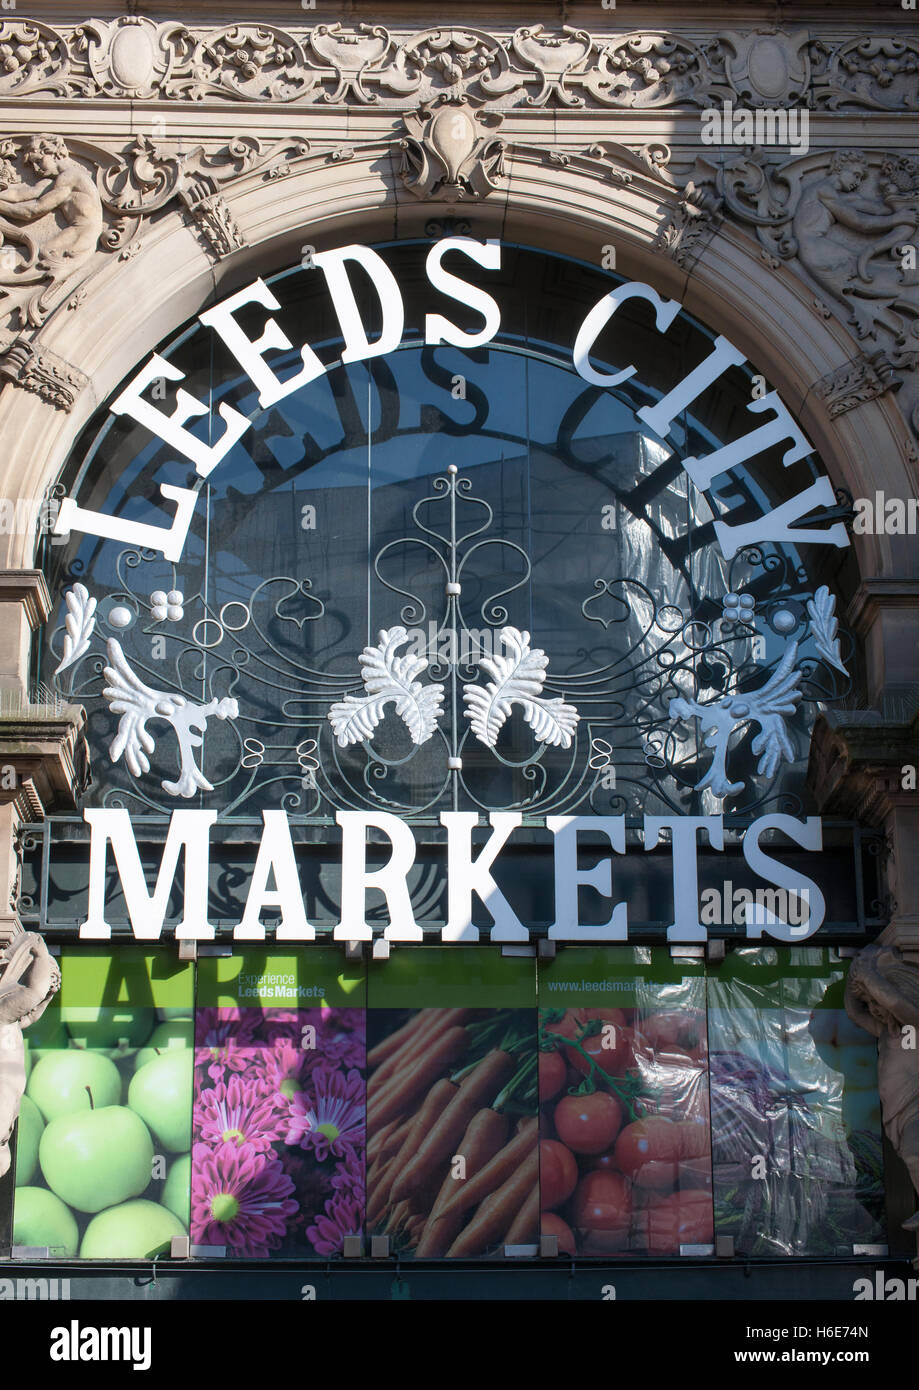 Leeds City Markets entrance sign Stock Photo